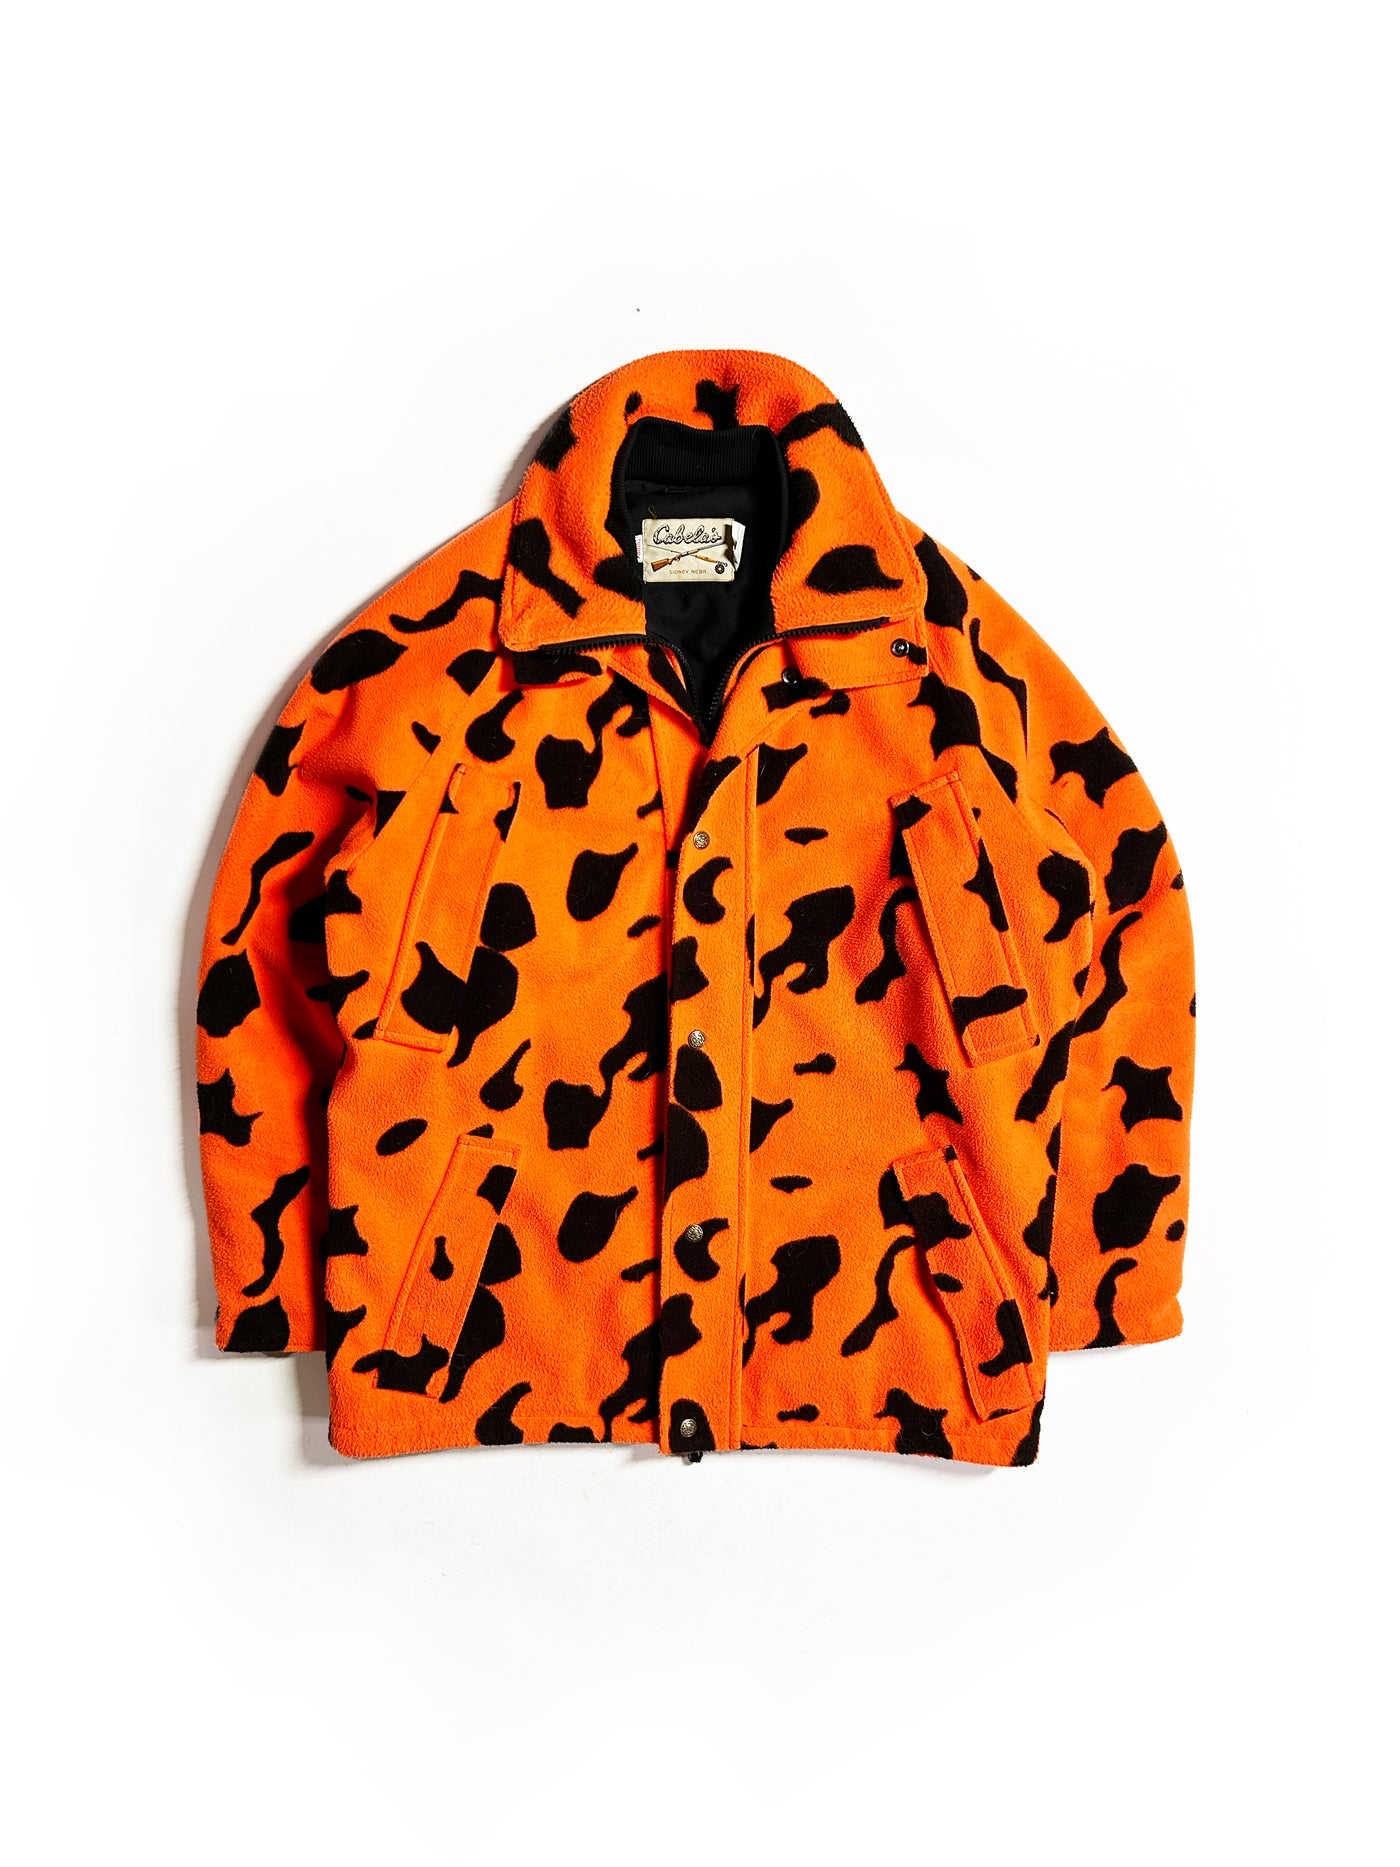 Vintage 80s Cabela’s Orange Camo Fleece Jacket